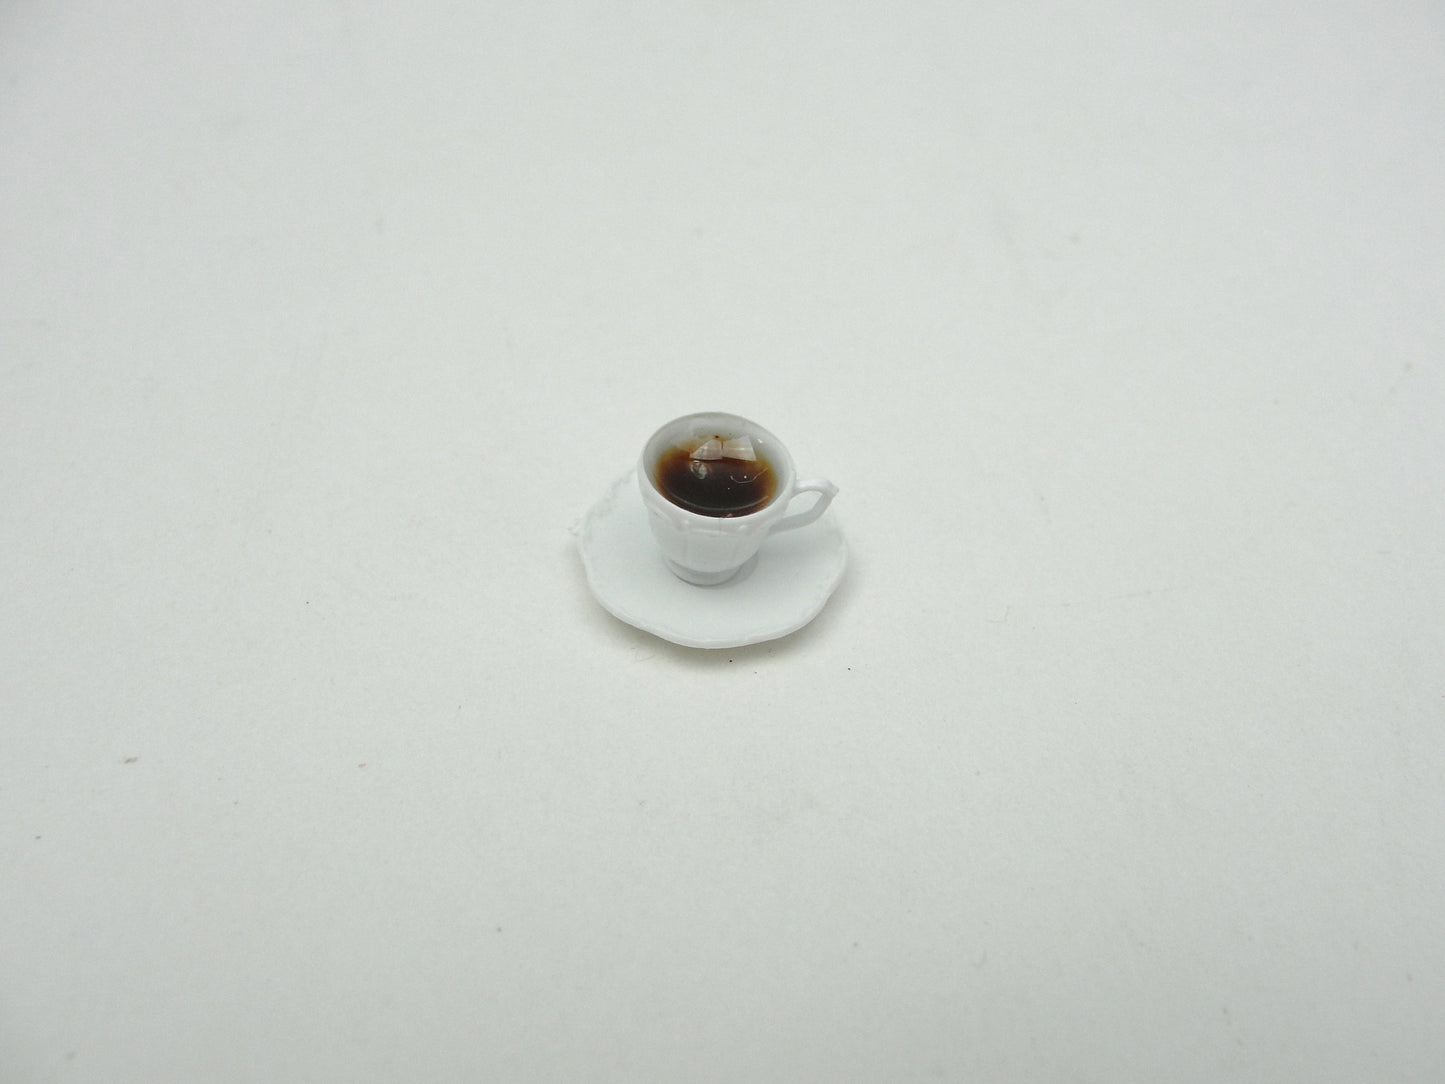 Dollhouse miniature coffee cup